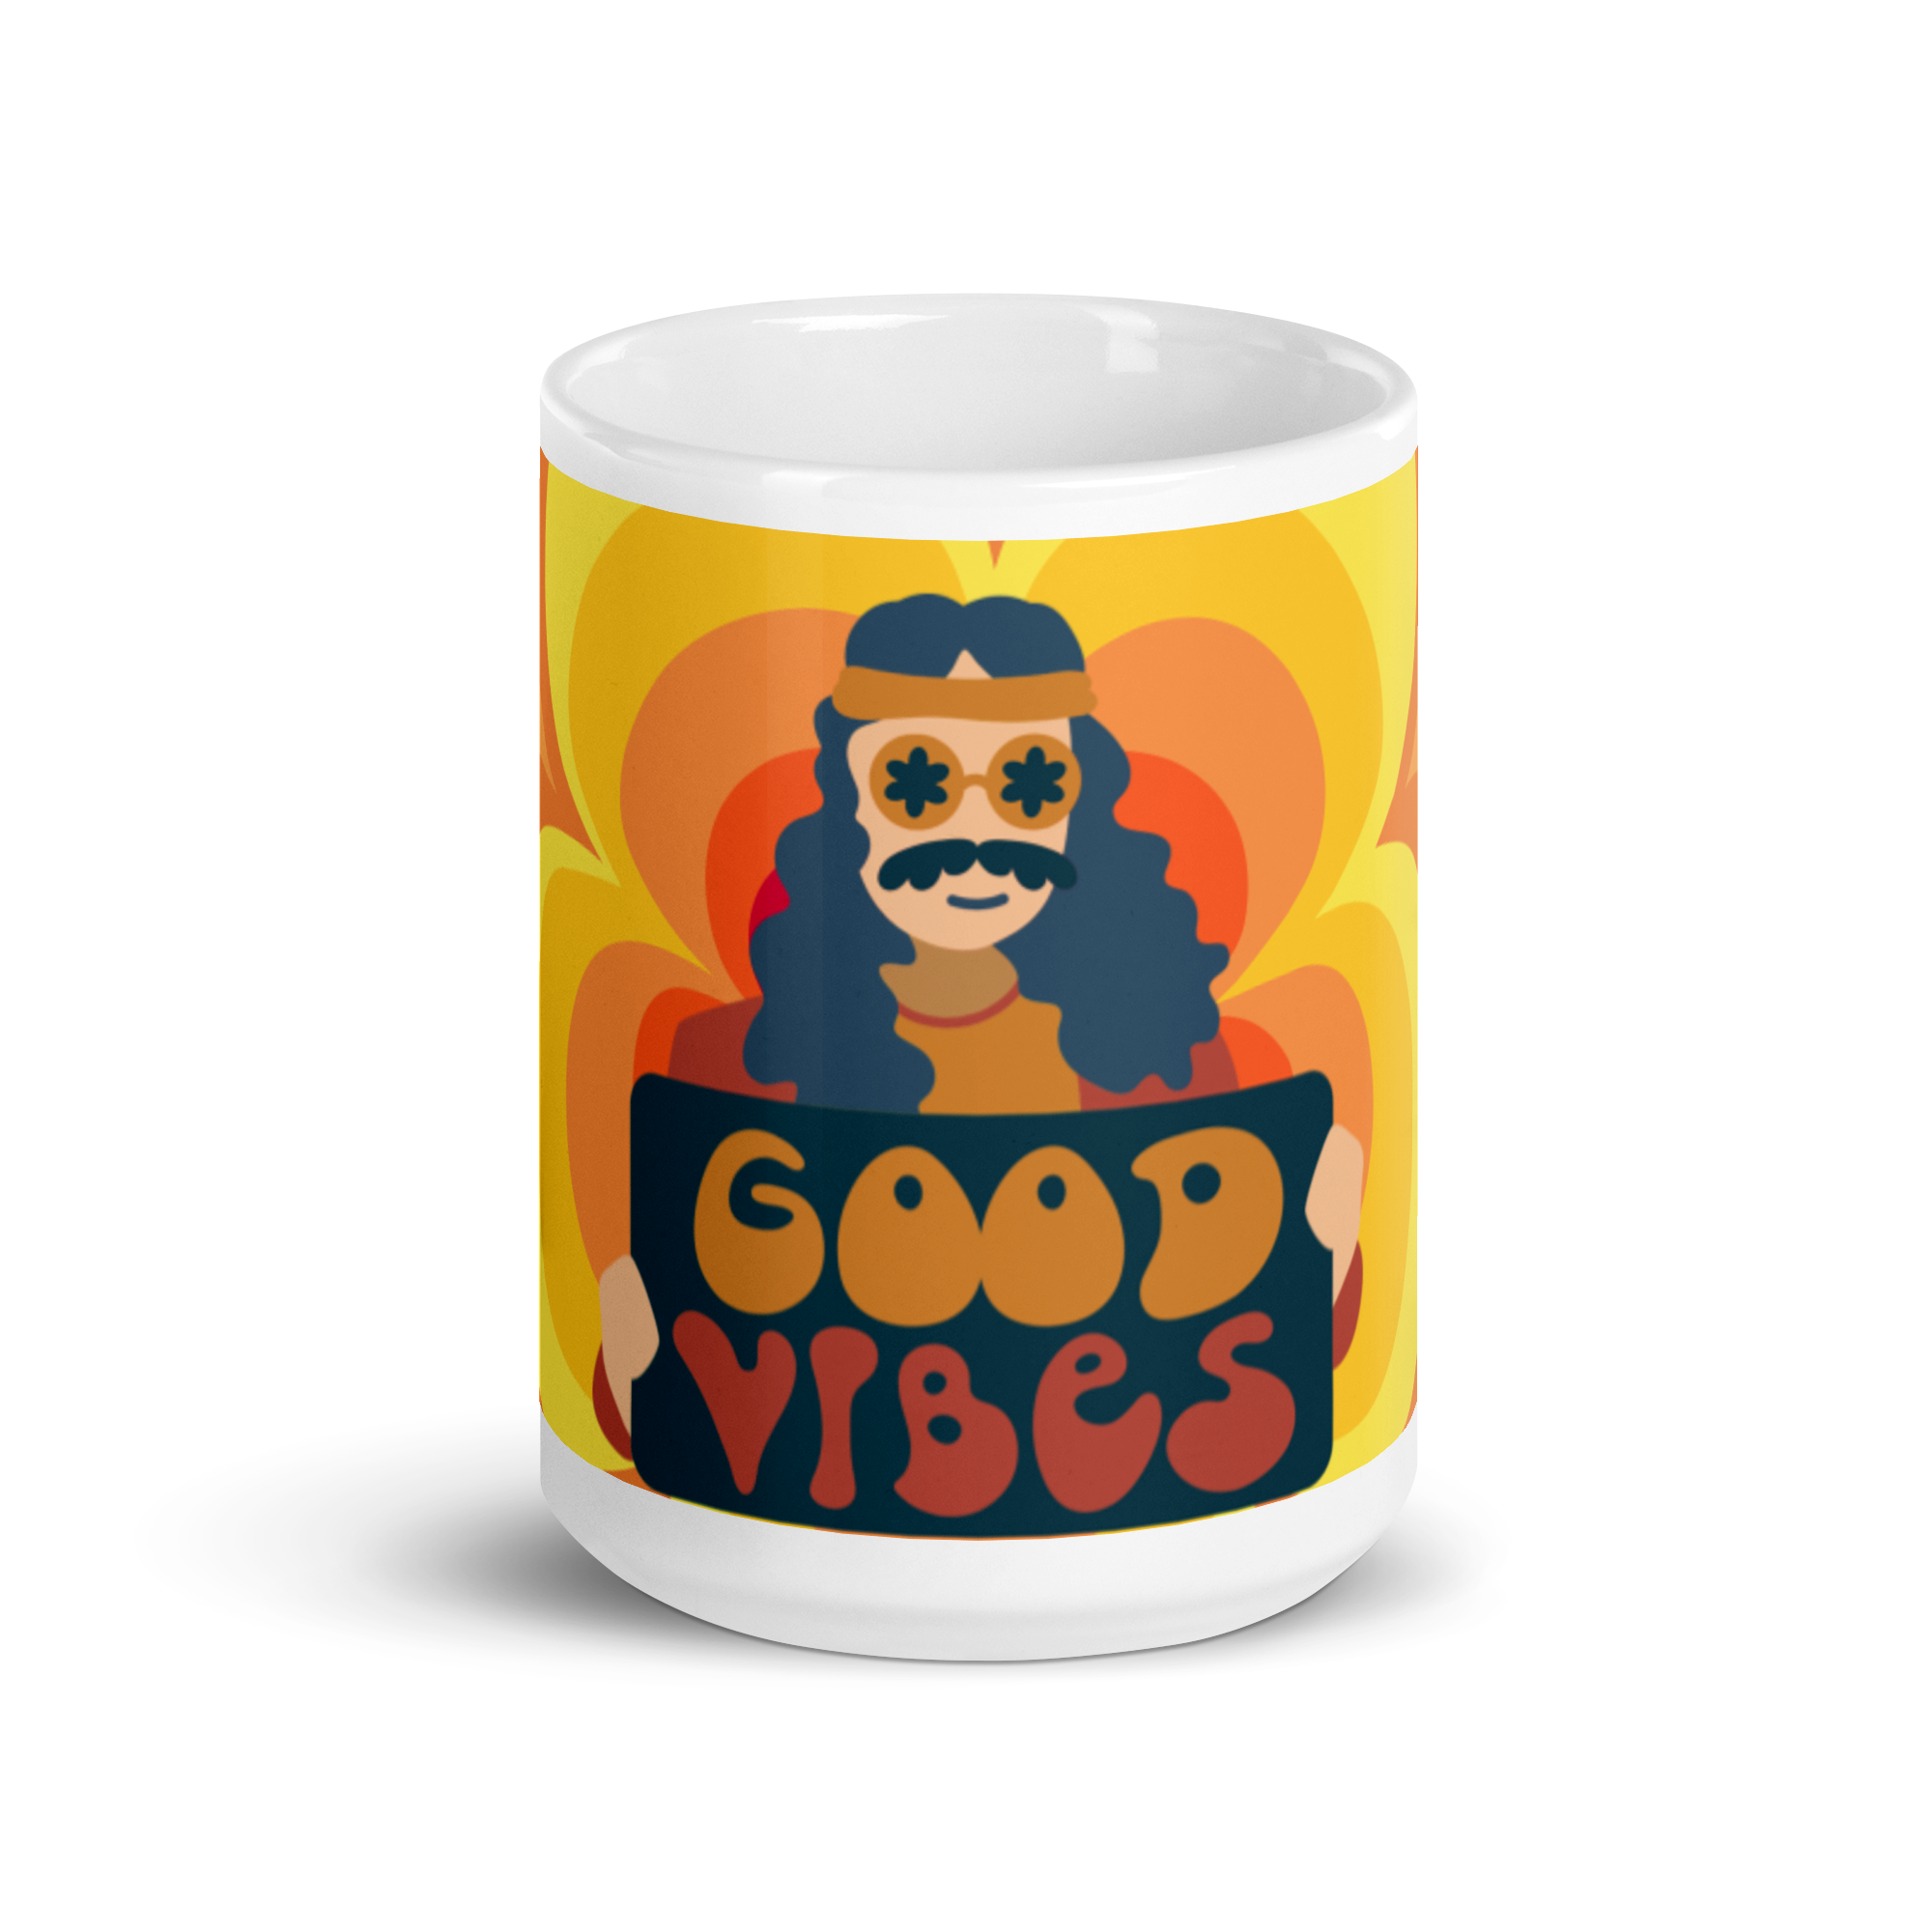 Good Vibes Retro Mug